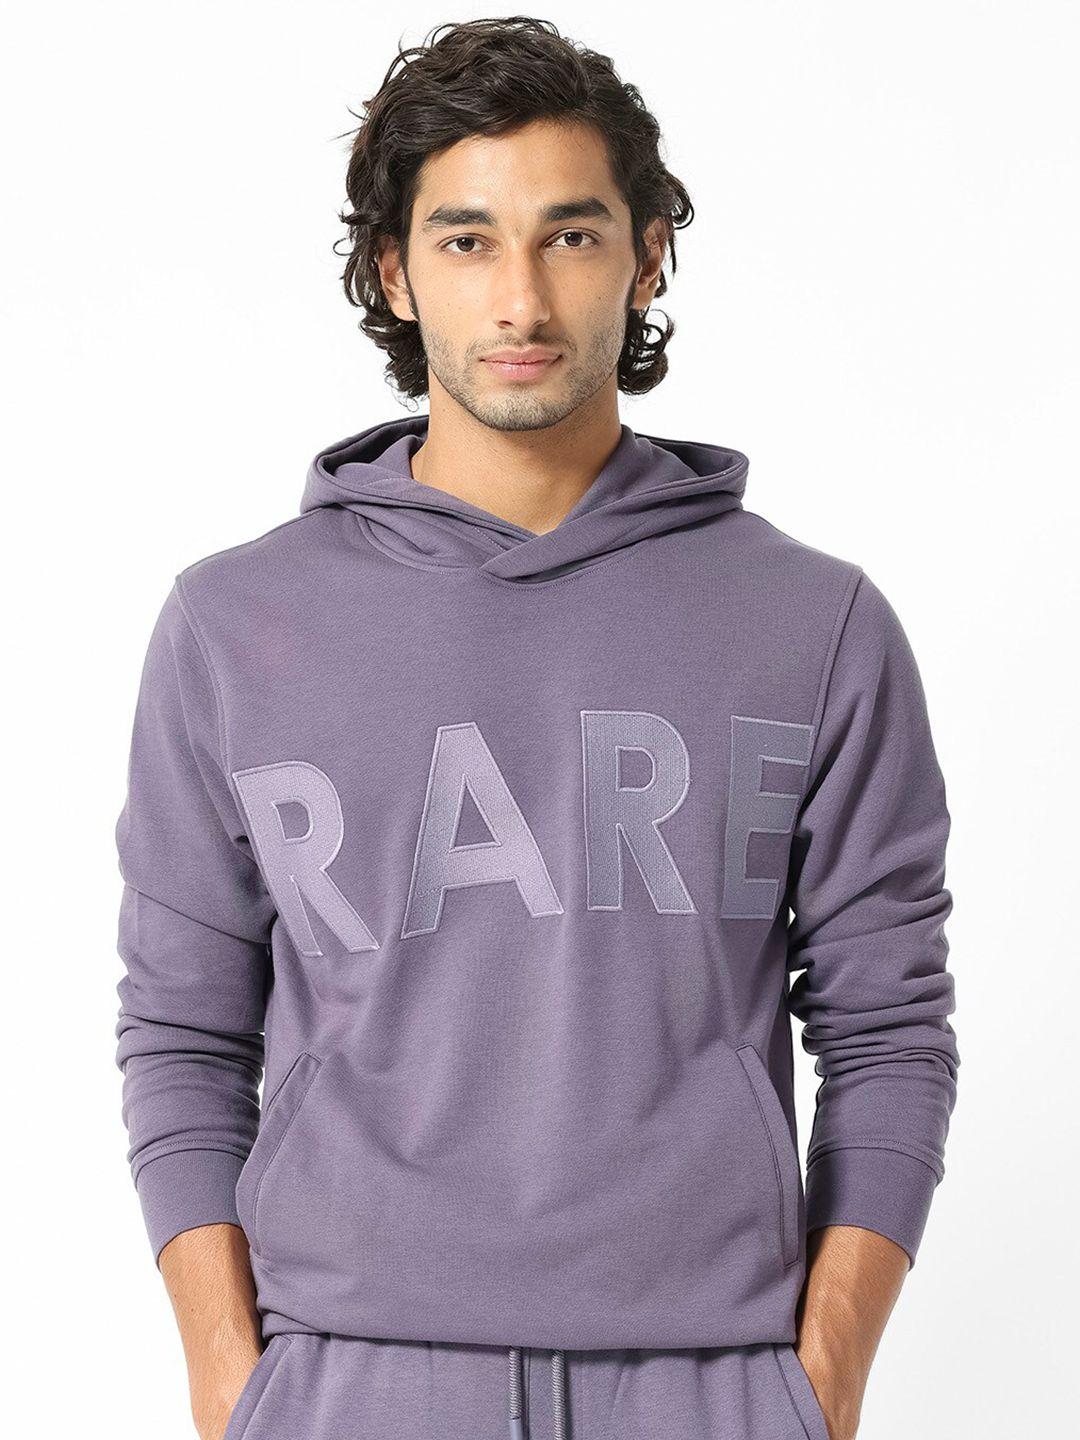 rare-rabbit-hooded-typography-printed-sweatshirt